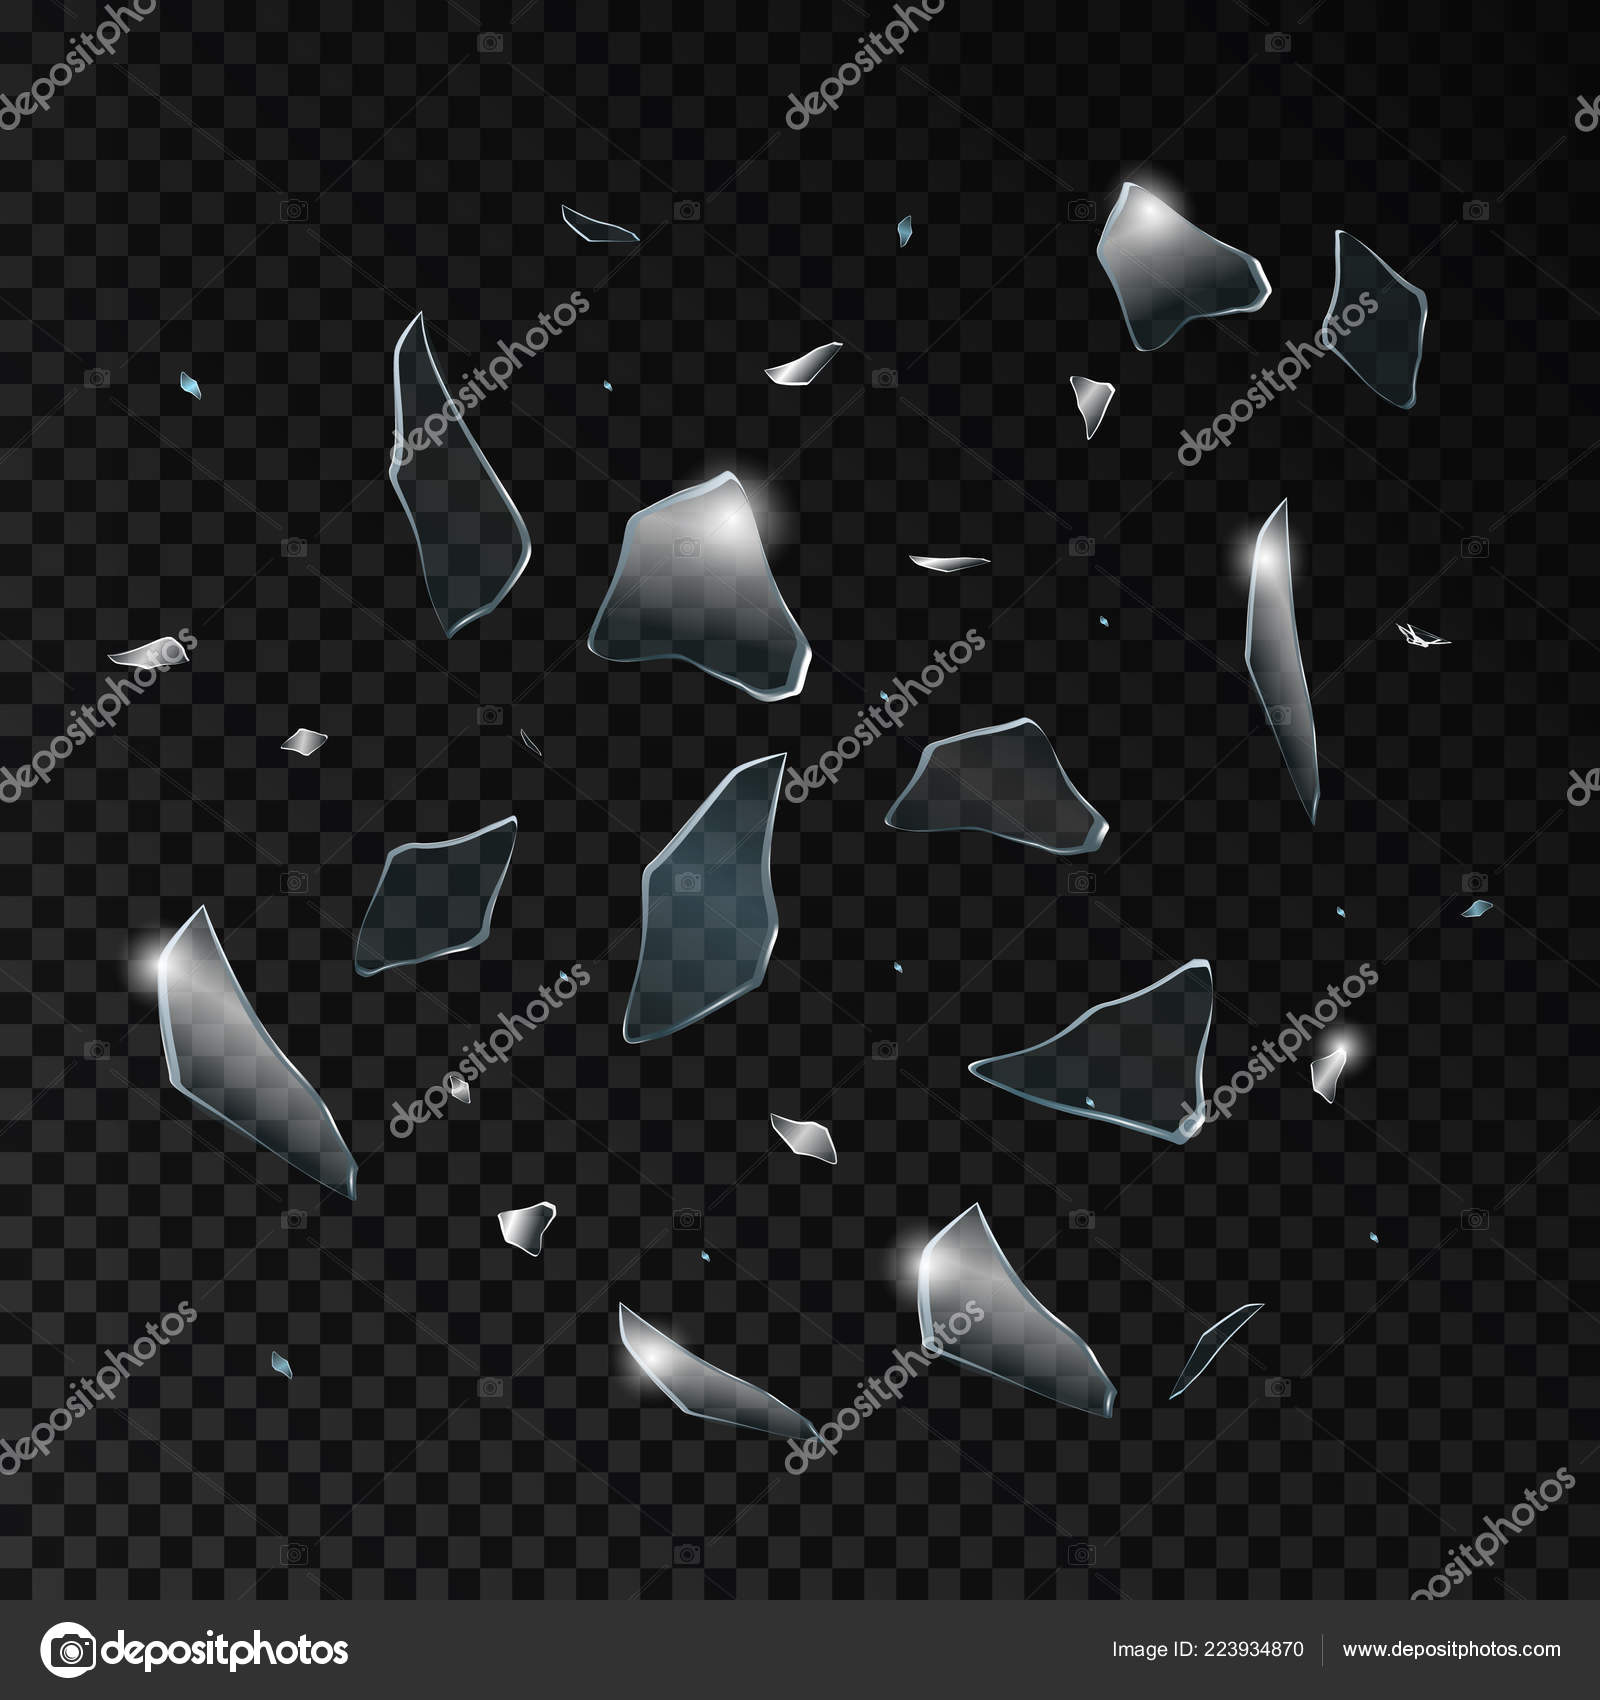 https://st4.depositphotos.com/4257063/22393/v/1600/depositphotos_223934870-stock-illustration-broken-glass-pieces-isolated-on.jpg